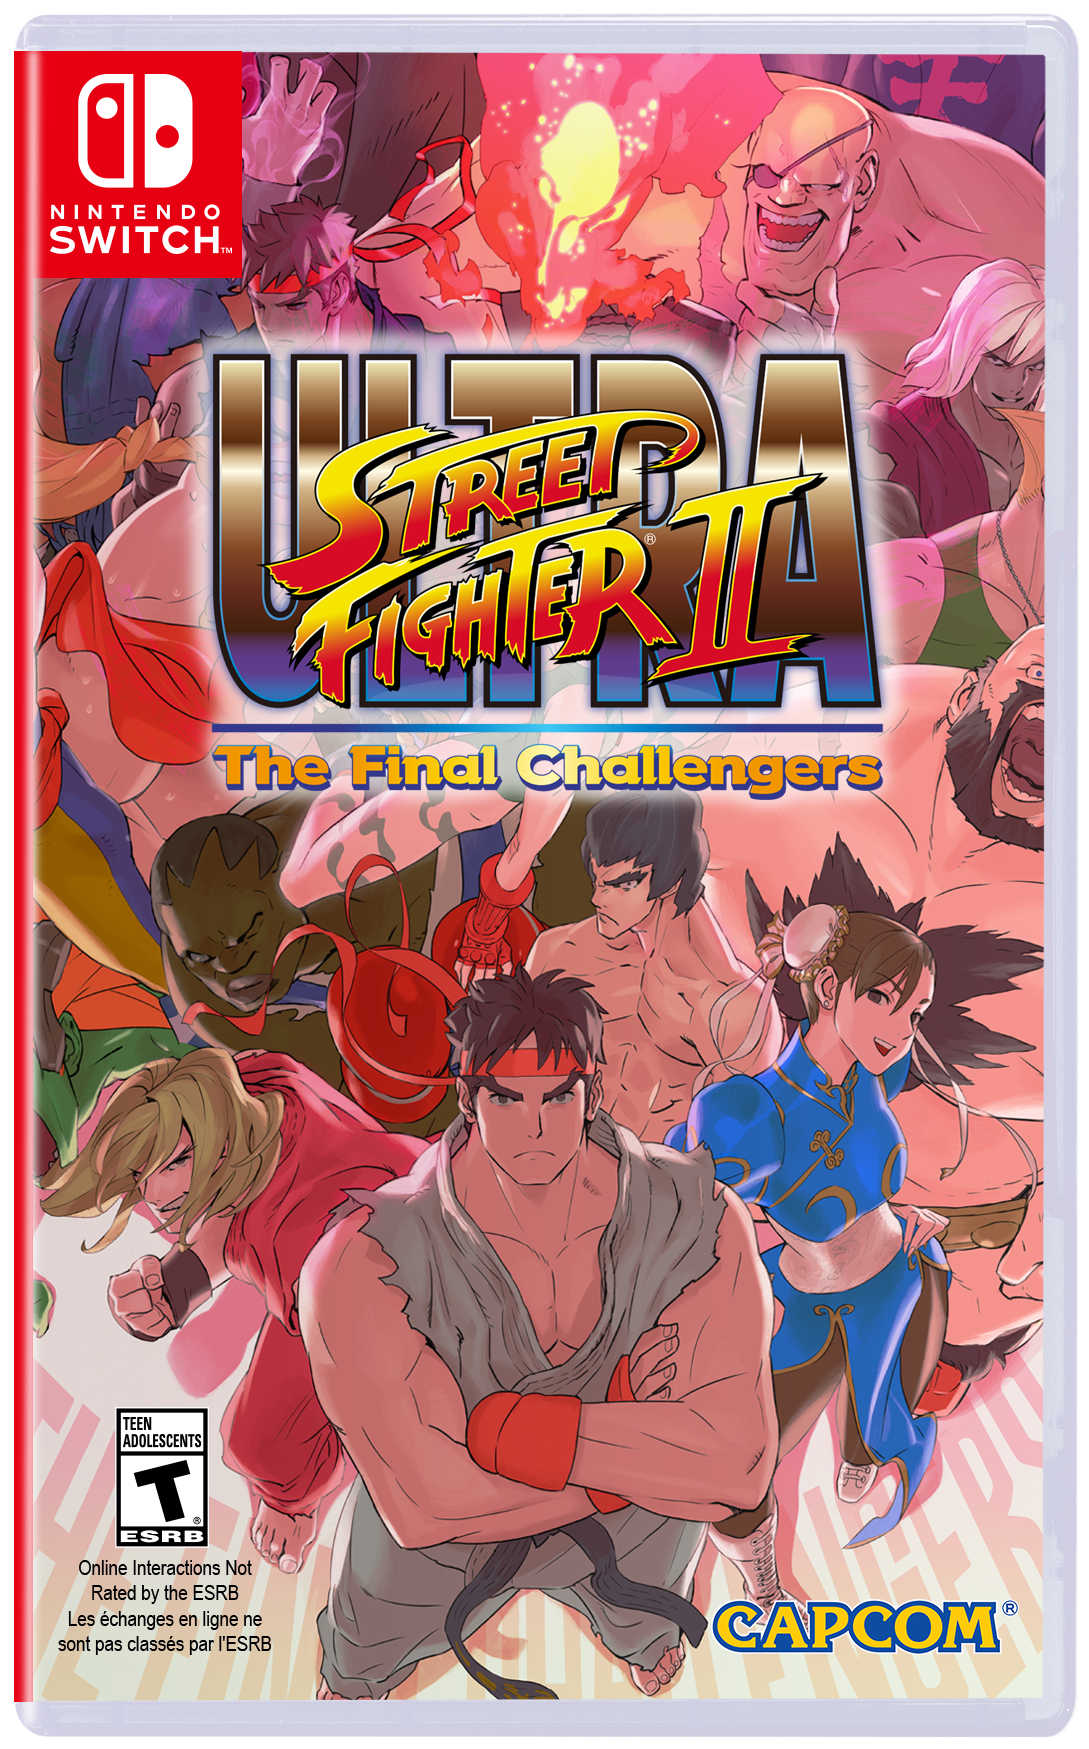 Super Street Fighter 2 Turbo/Vega - SuperCombo Wiki